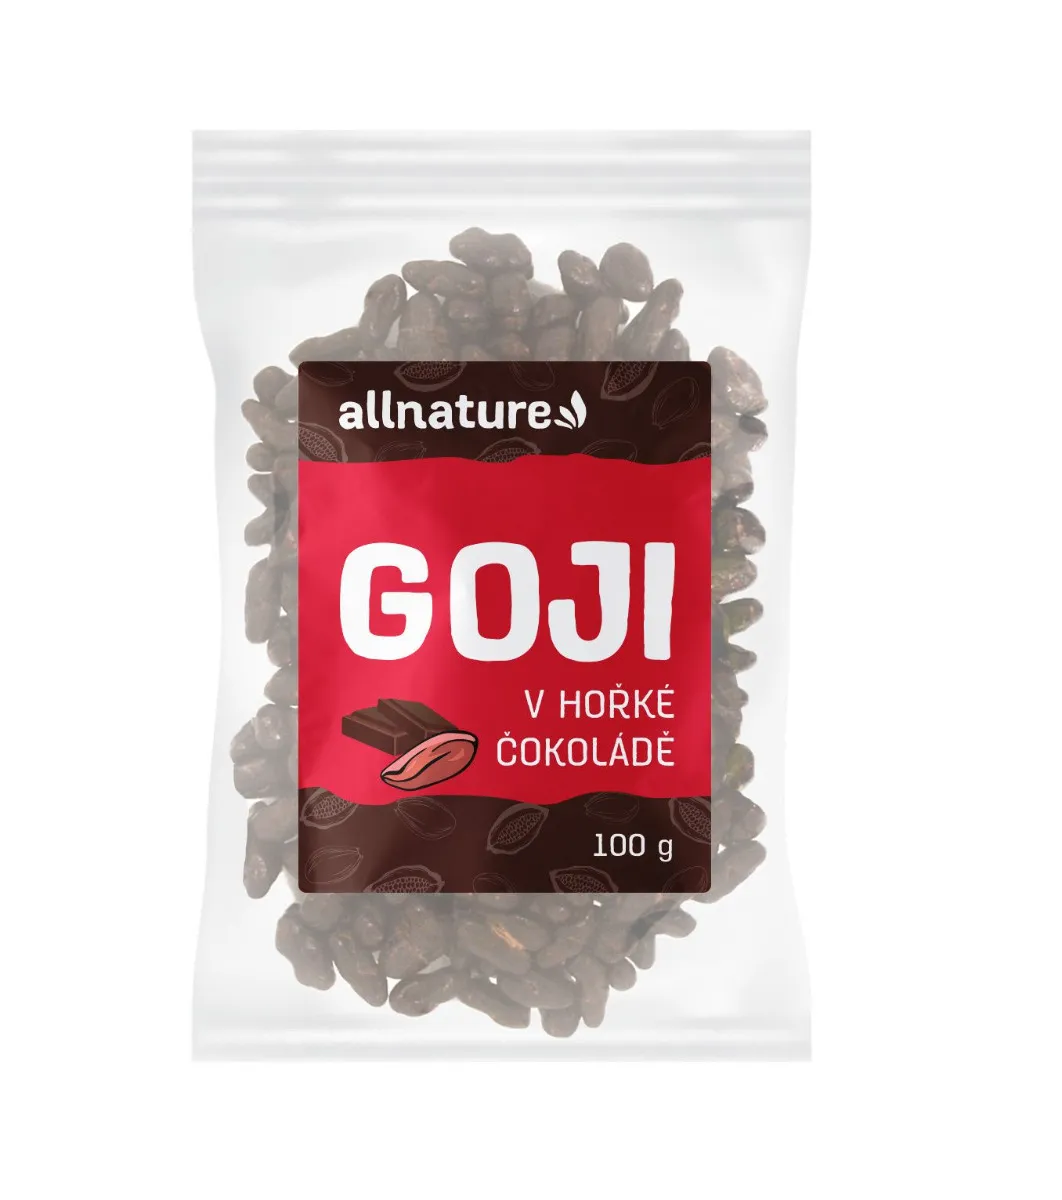 Allnature Goji v hořké čokoládě